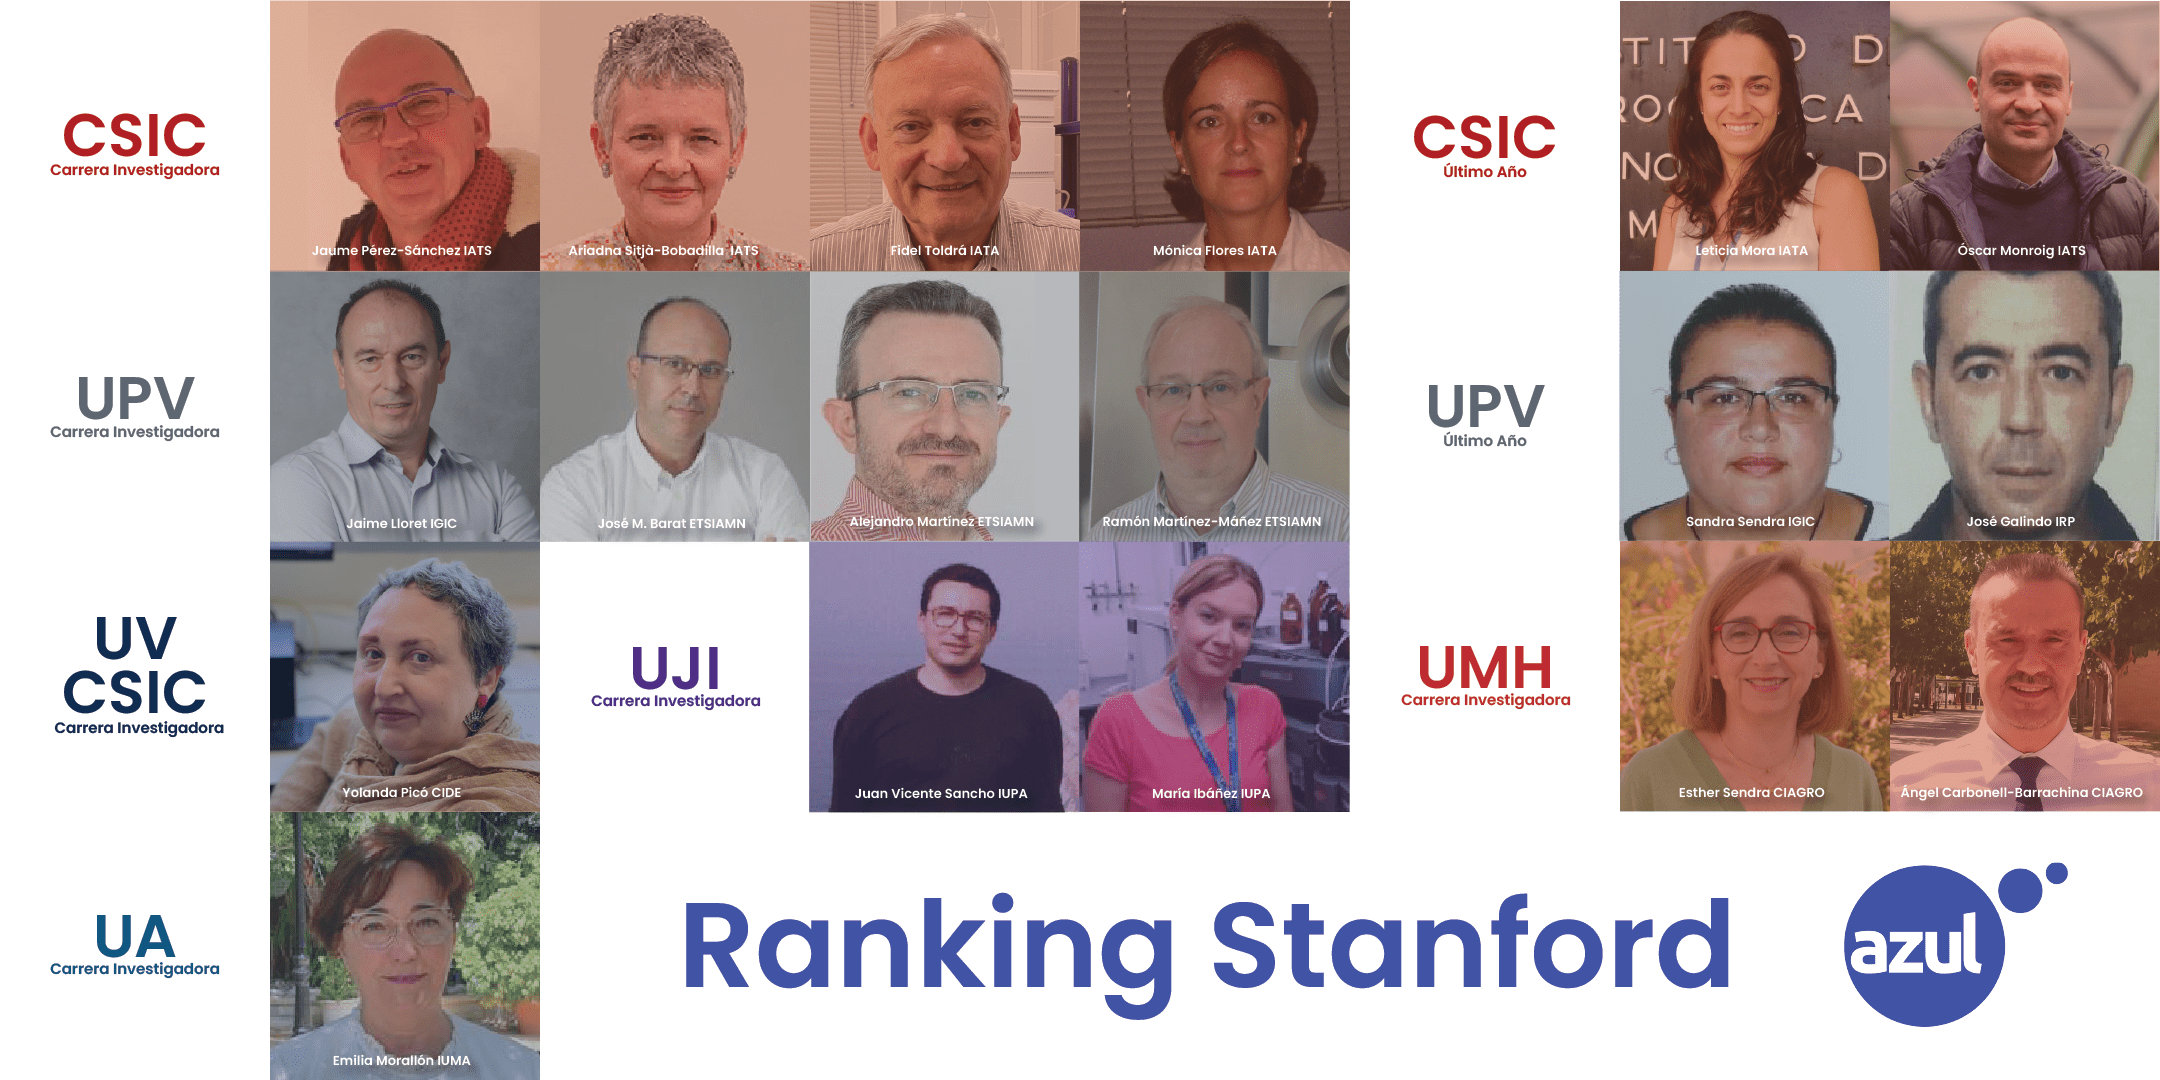 Ranking Stanford ThinkInAzul